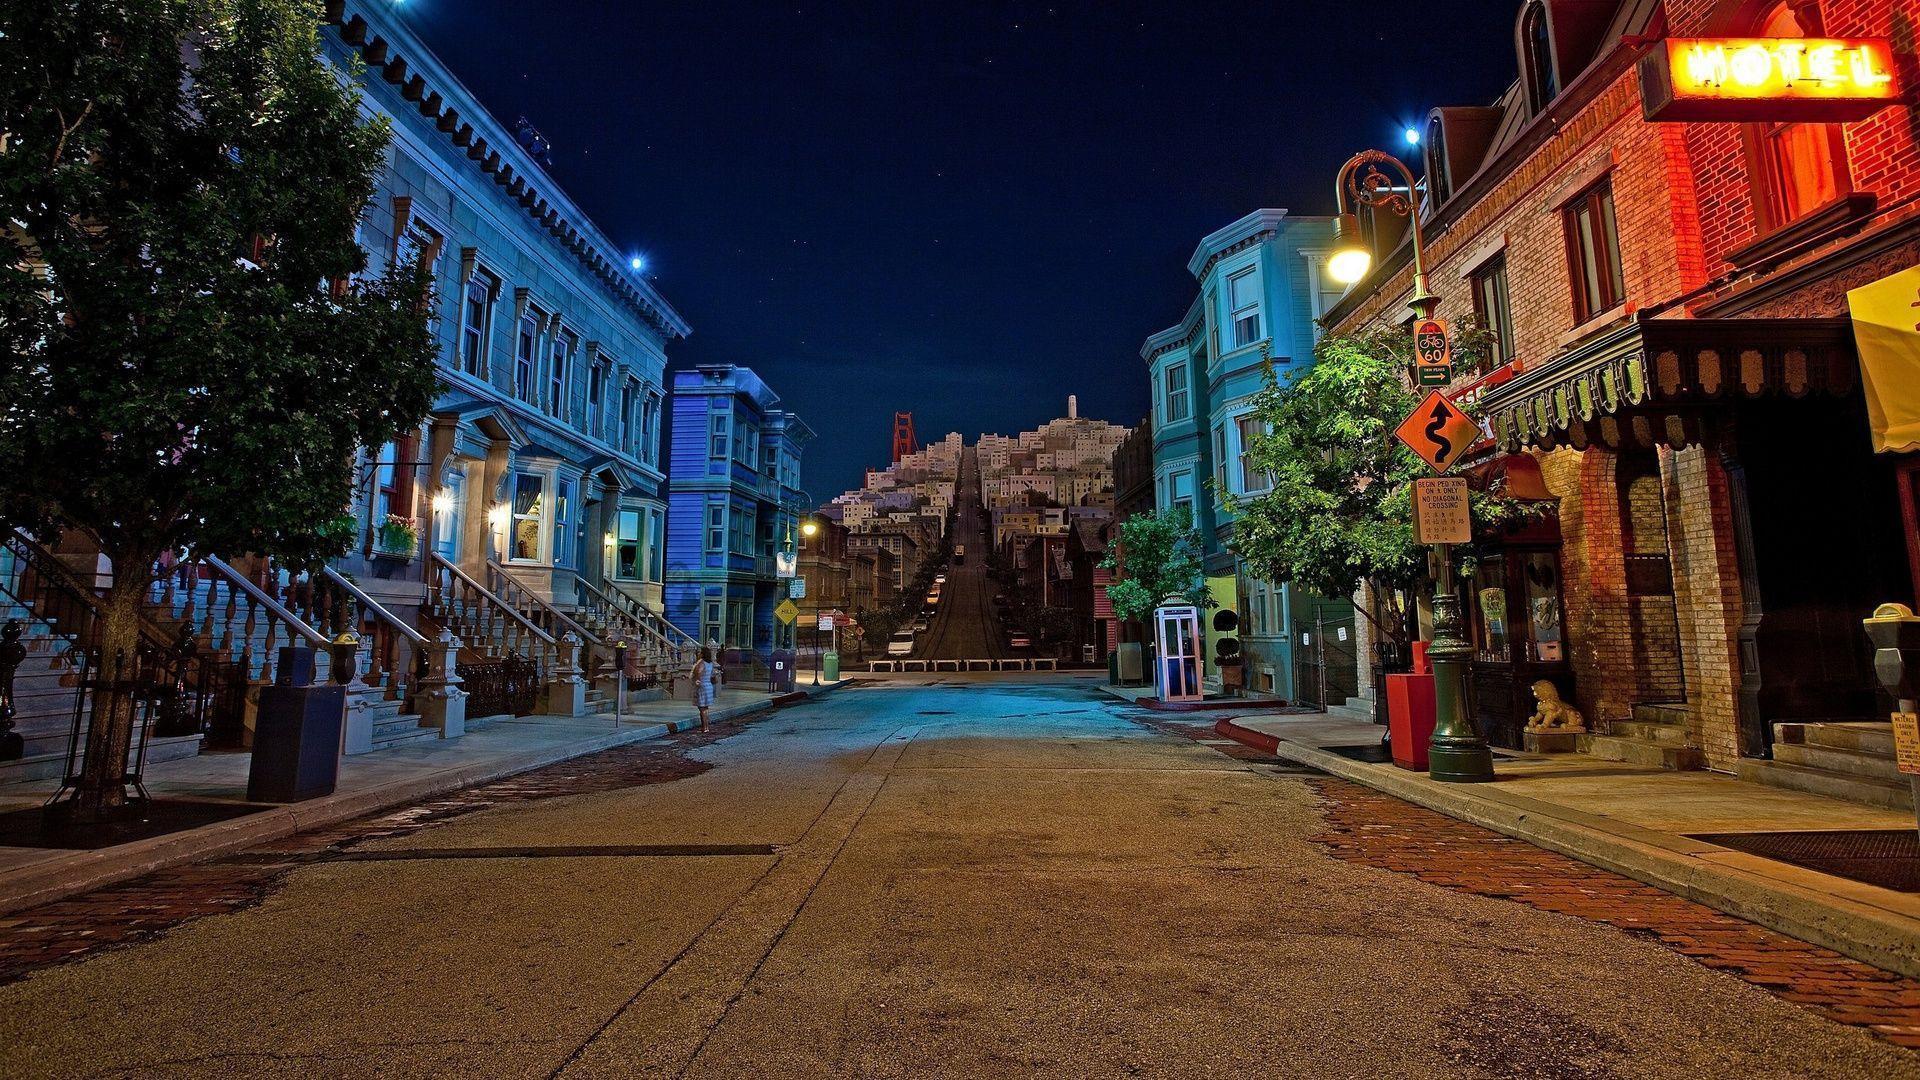 City Street at Night. STREETS NIGHT. Night city, 3D